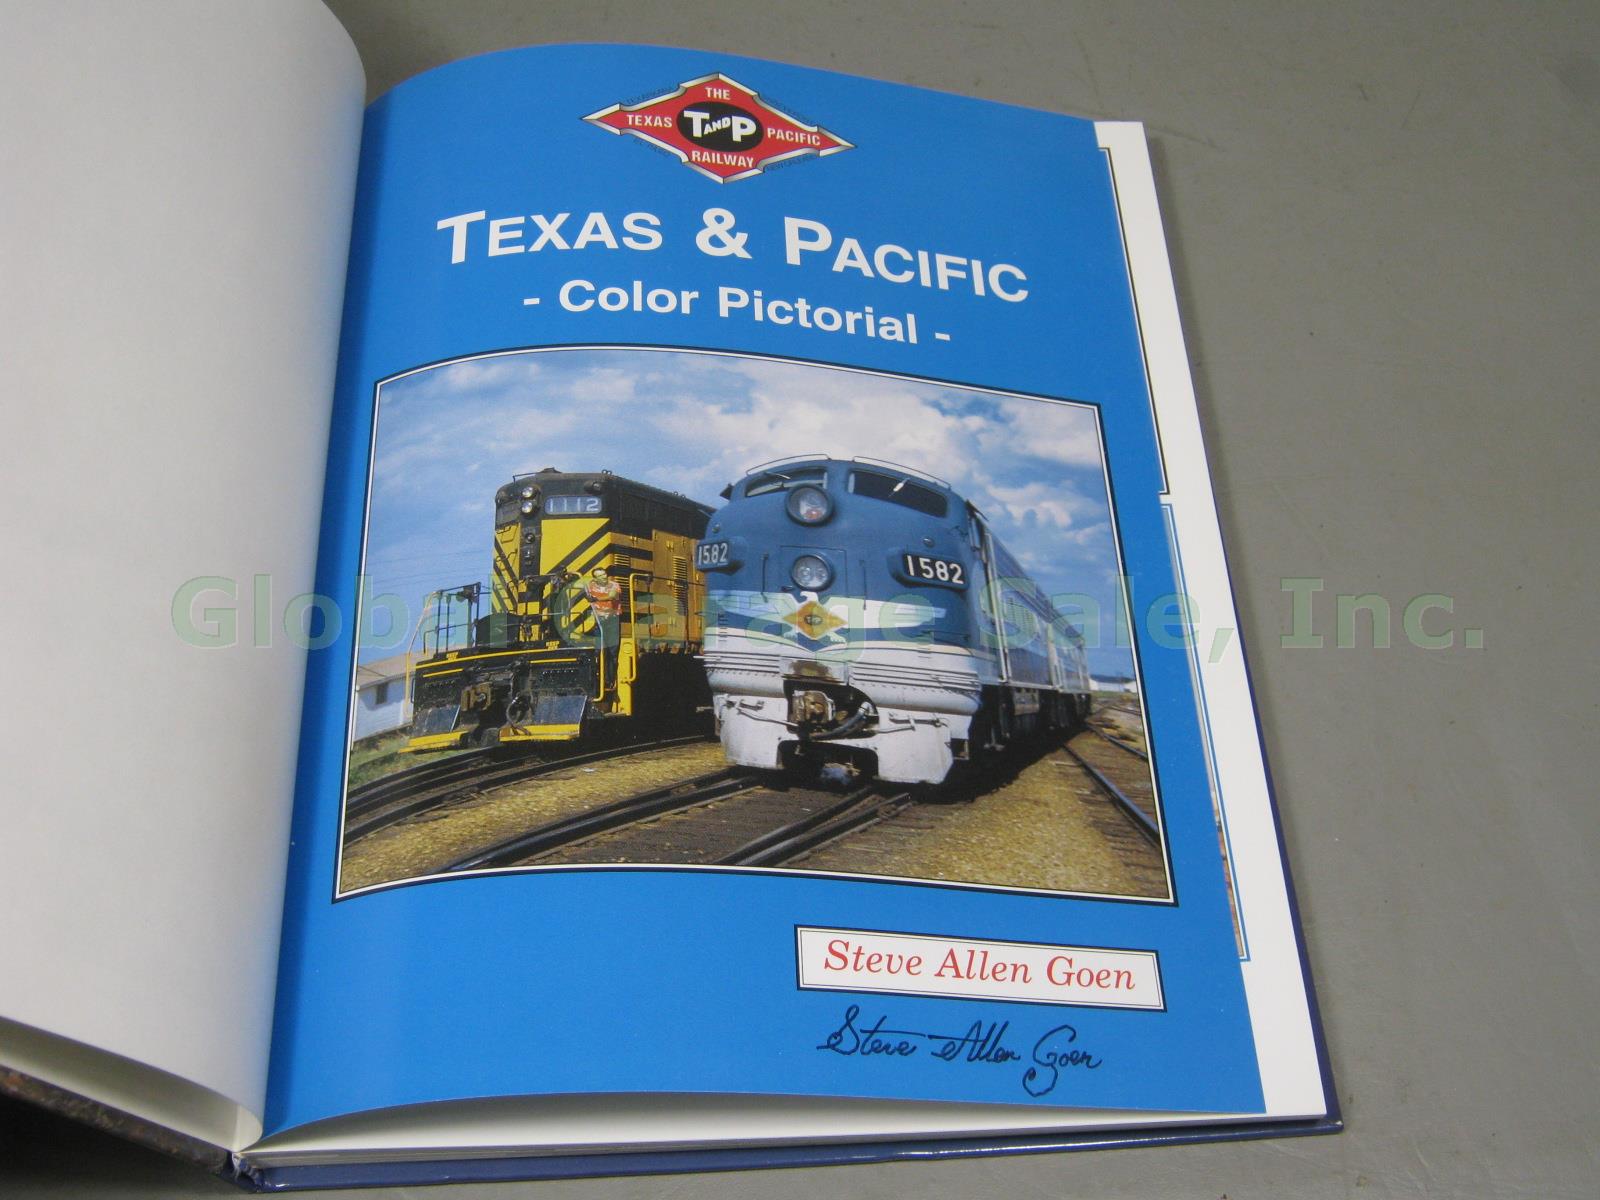 Passenger Trains of Texas - Cotton Belt